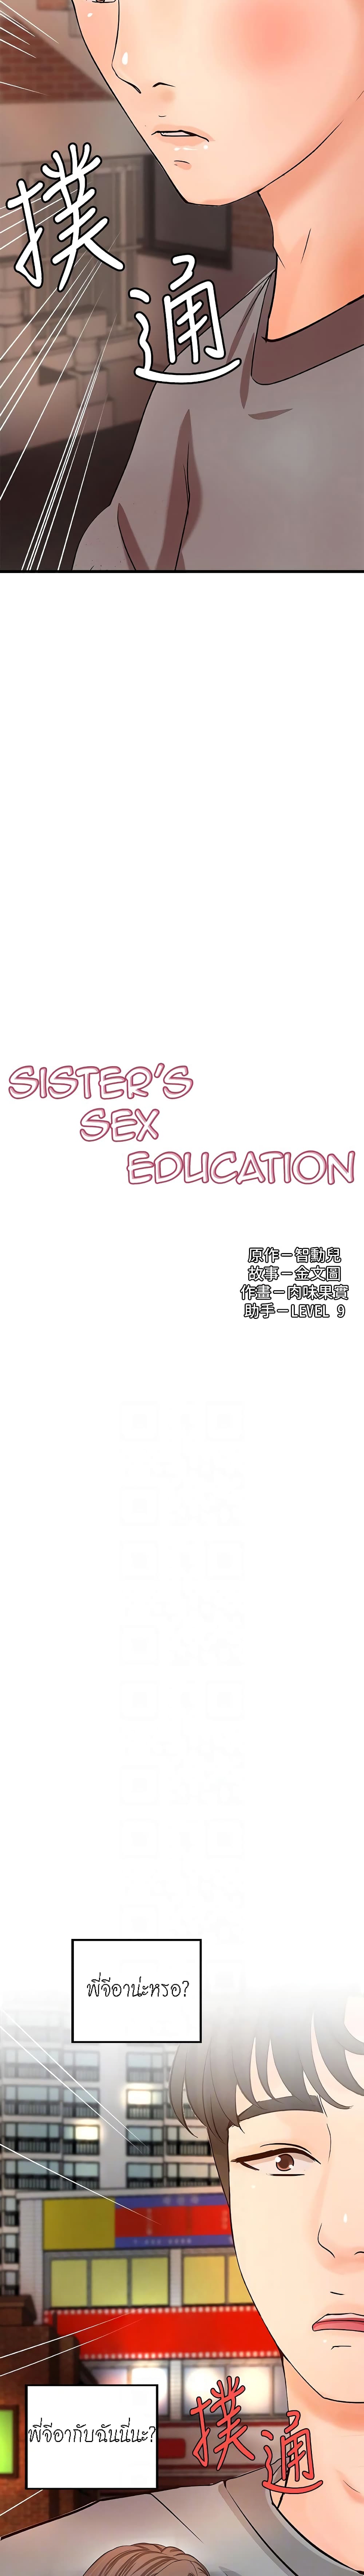 Sister's Sex Education 23 (3)